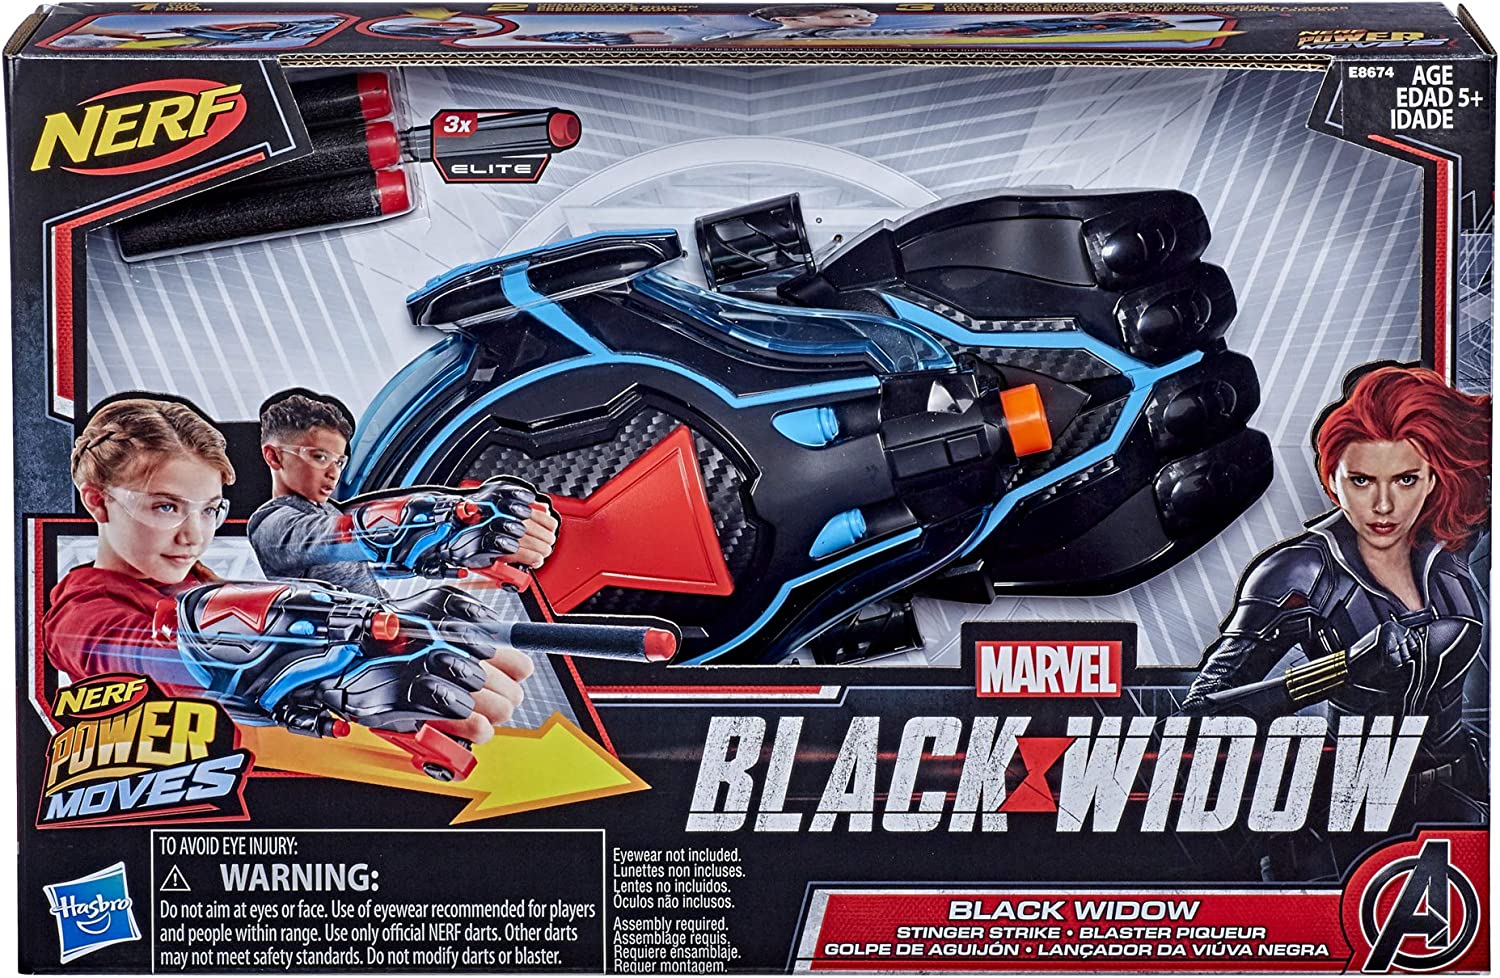 Hasbro Nerf Power Moves Marvel Black Widow Stinger Strike Dart-Launching Toy $7.49 & More